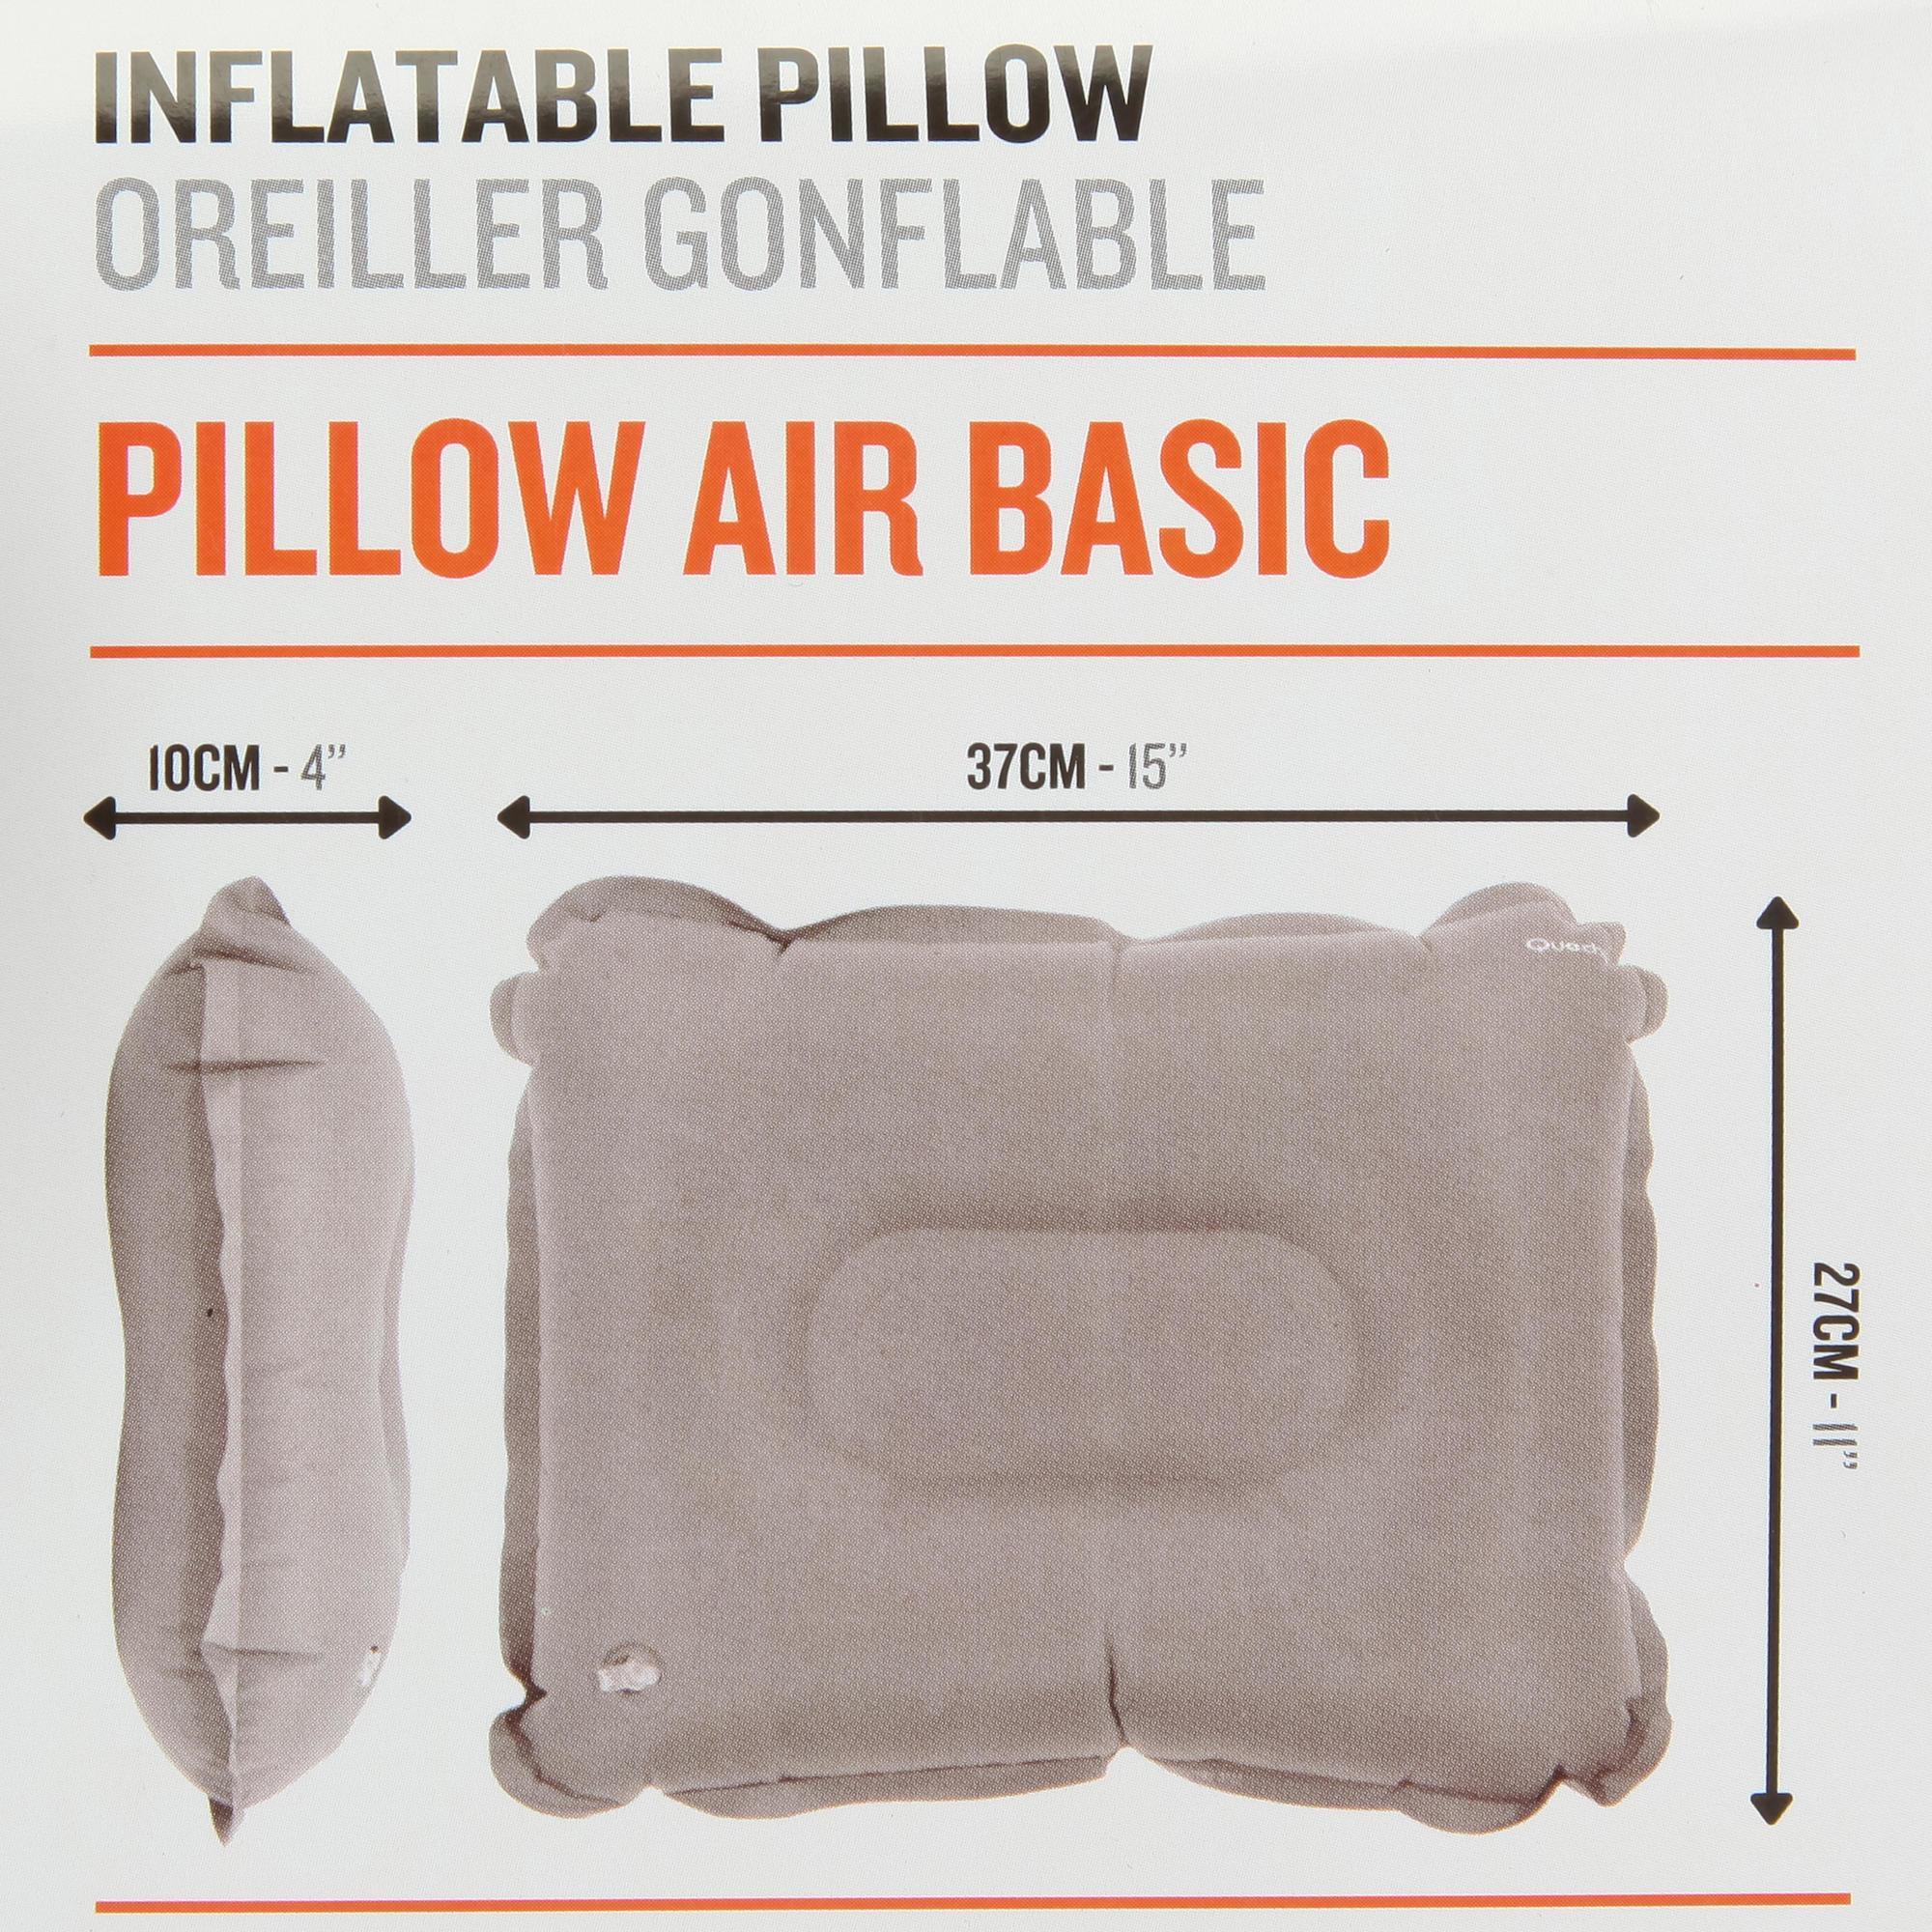 decathlon pillow air basic